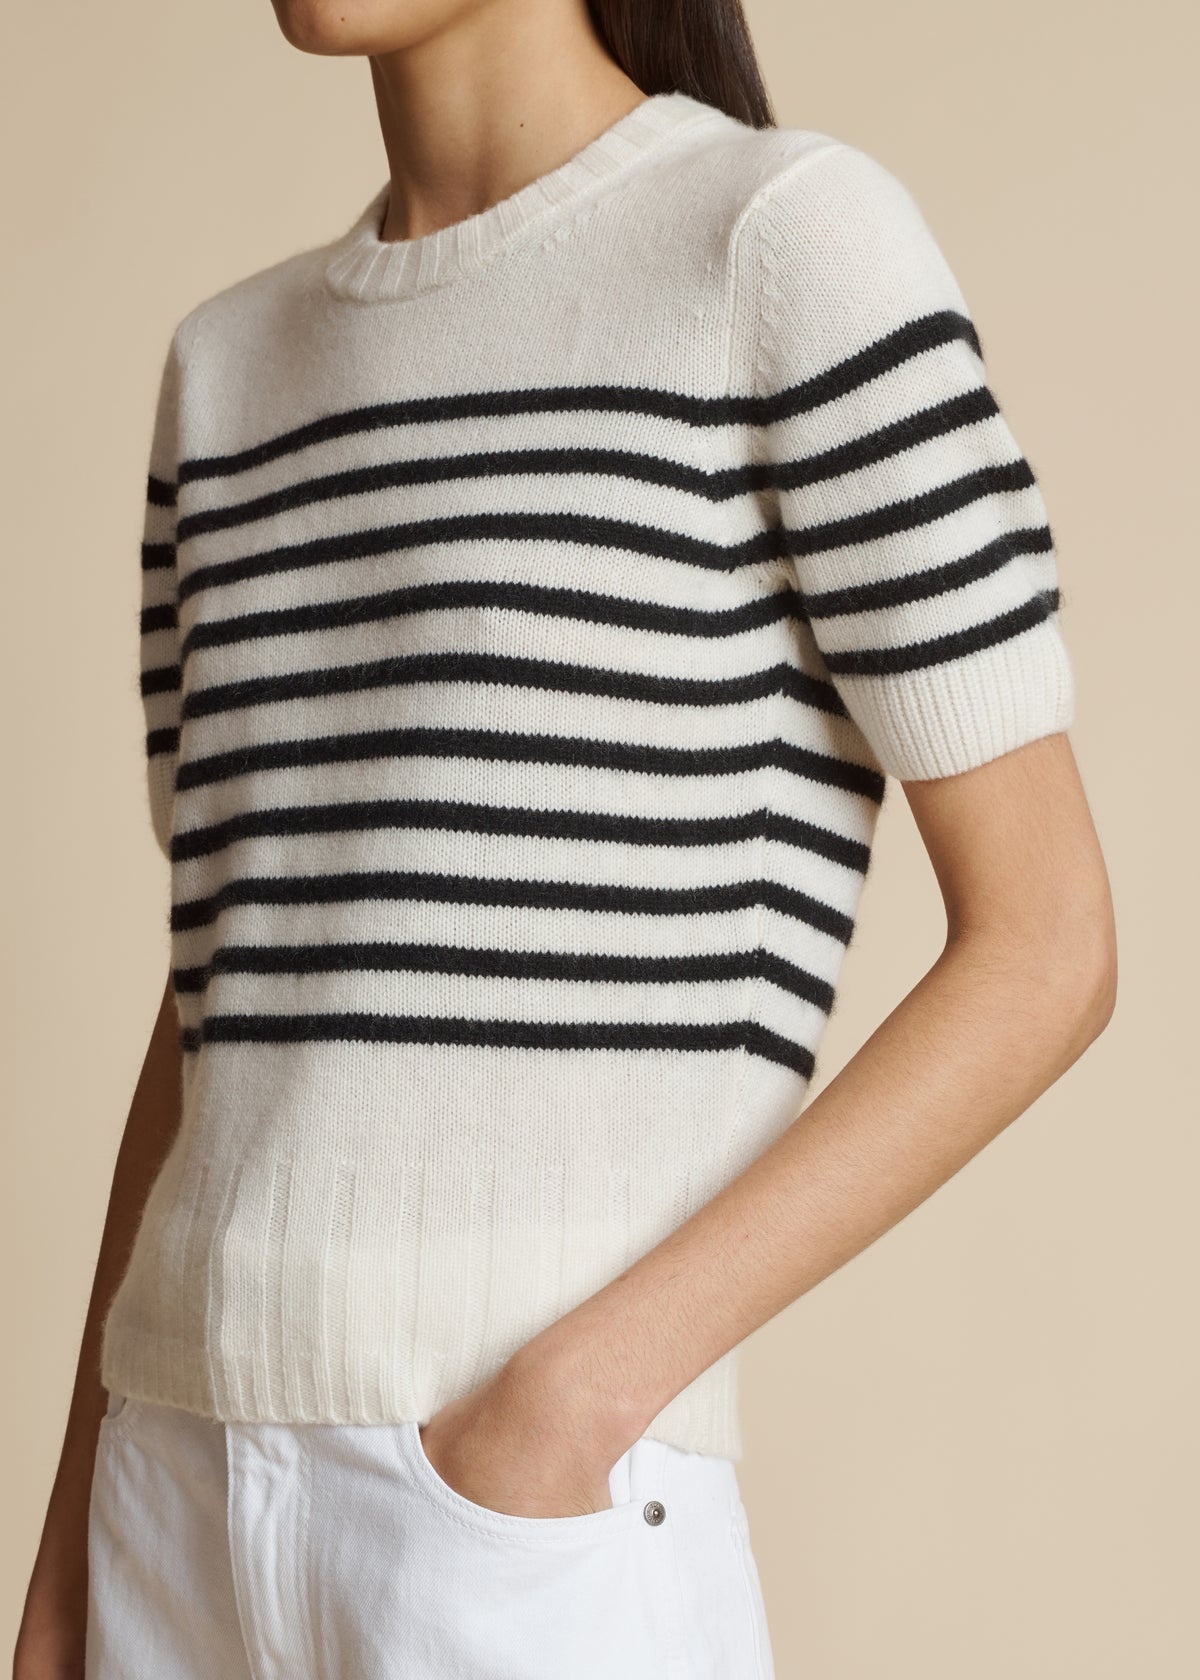 The Luphia Sweater in Glaze and Black Stripe - 4